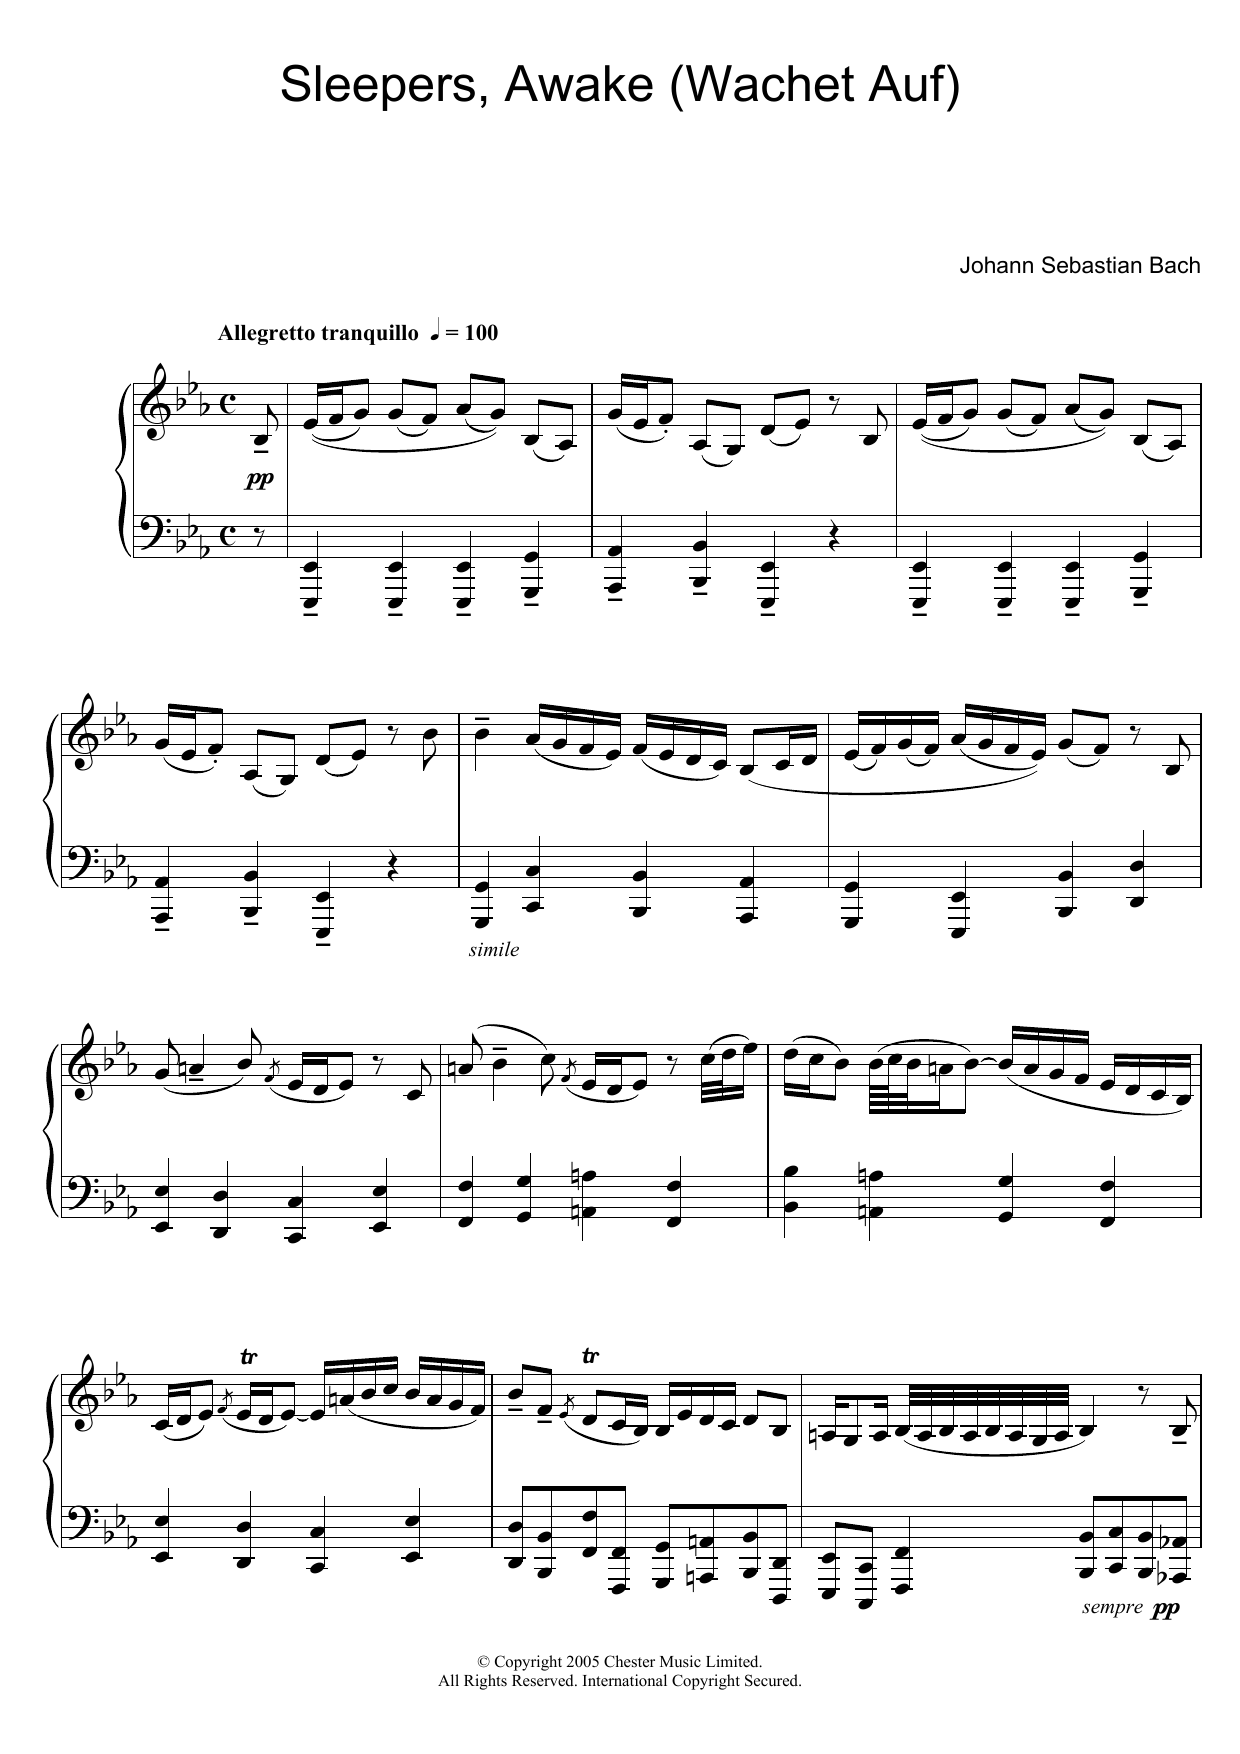 Johann Sebastian Bach Sleepers, Awake (Wachet Auf) Sheet Music Notes & Chords for Viola - Download or Print PDF